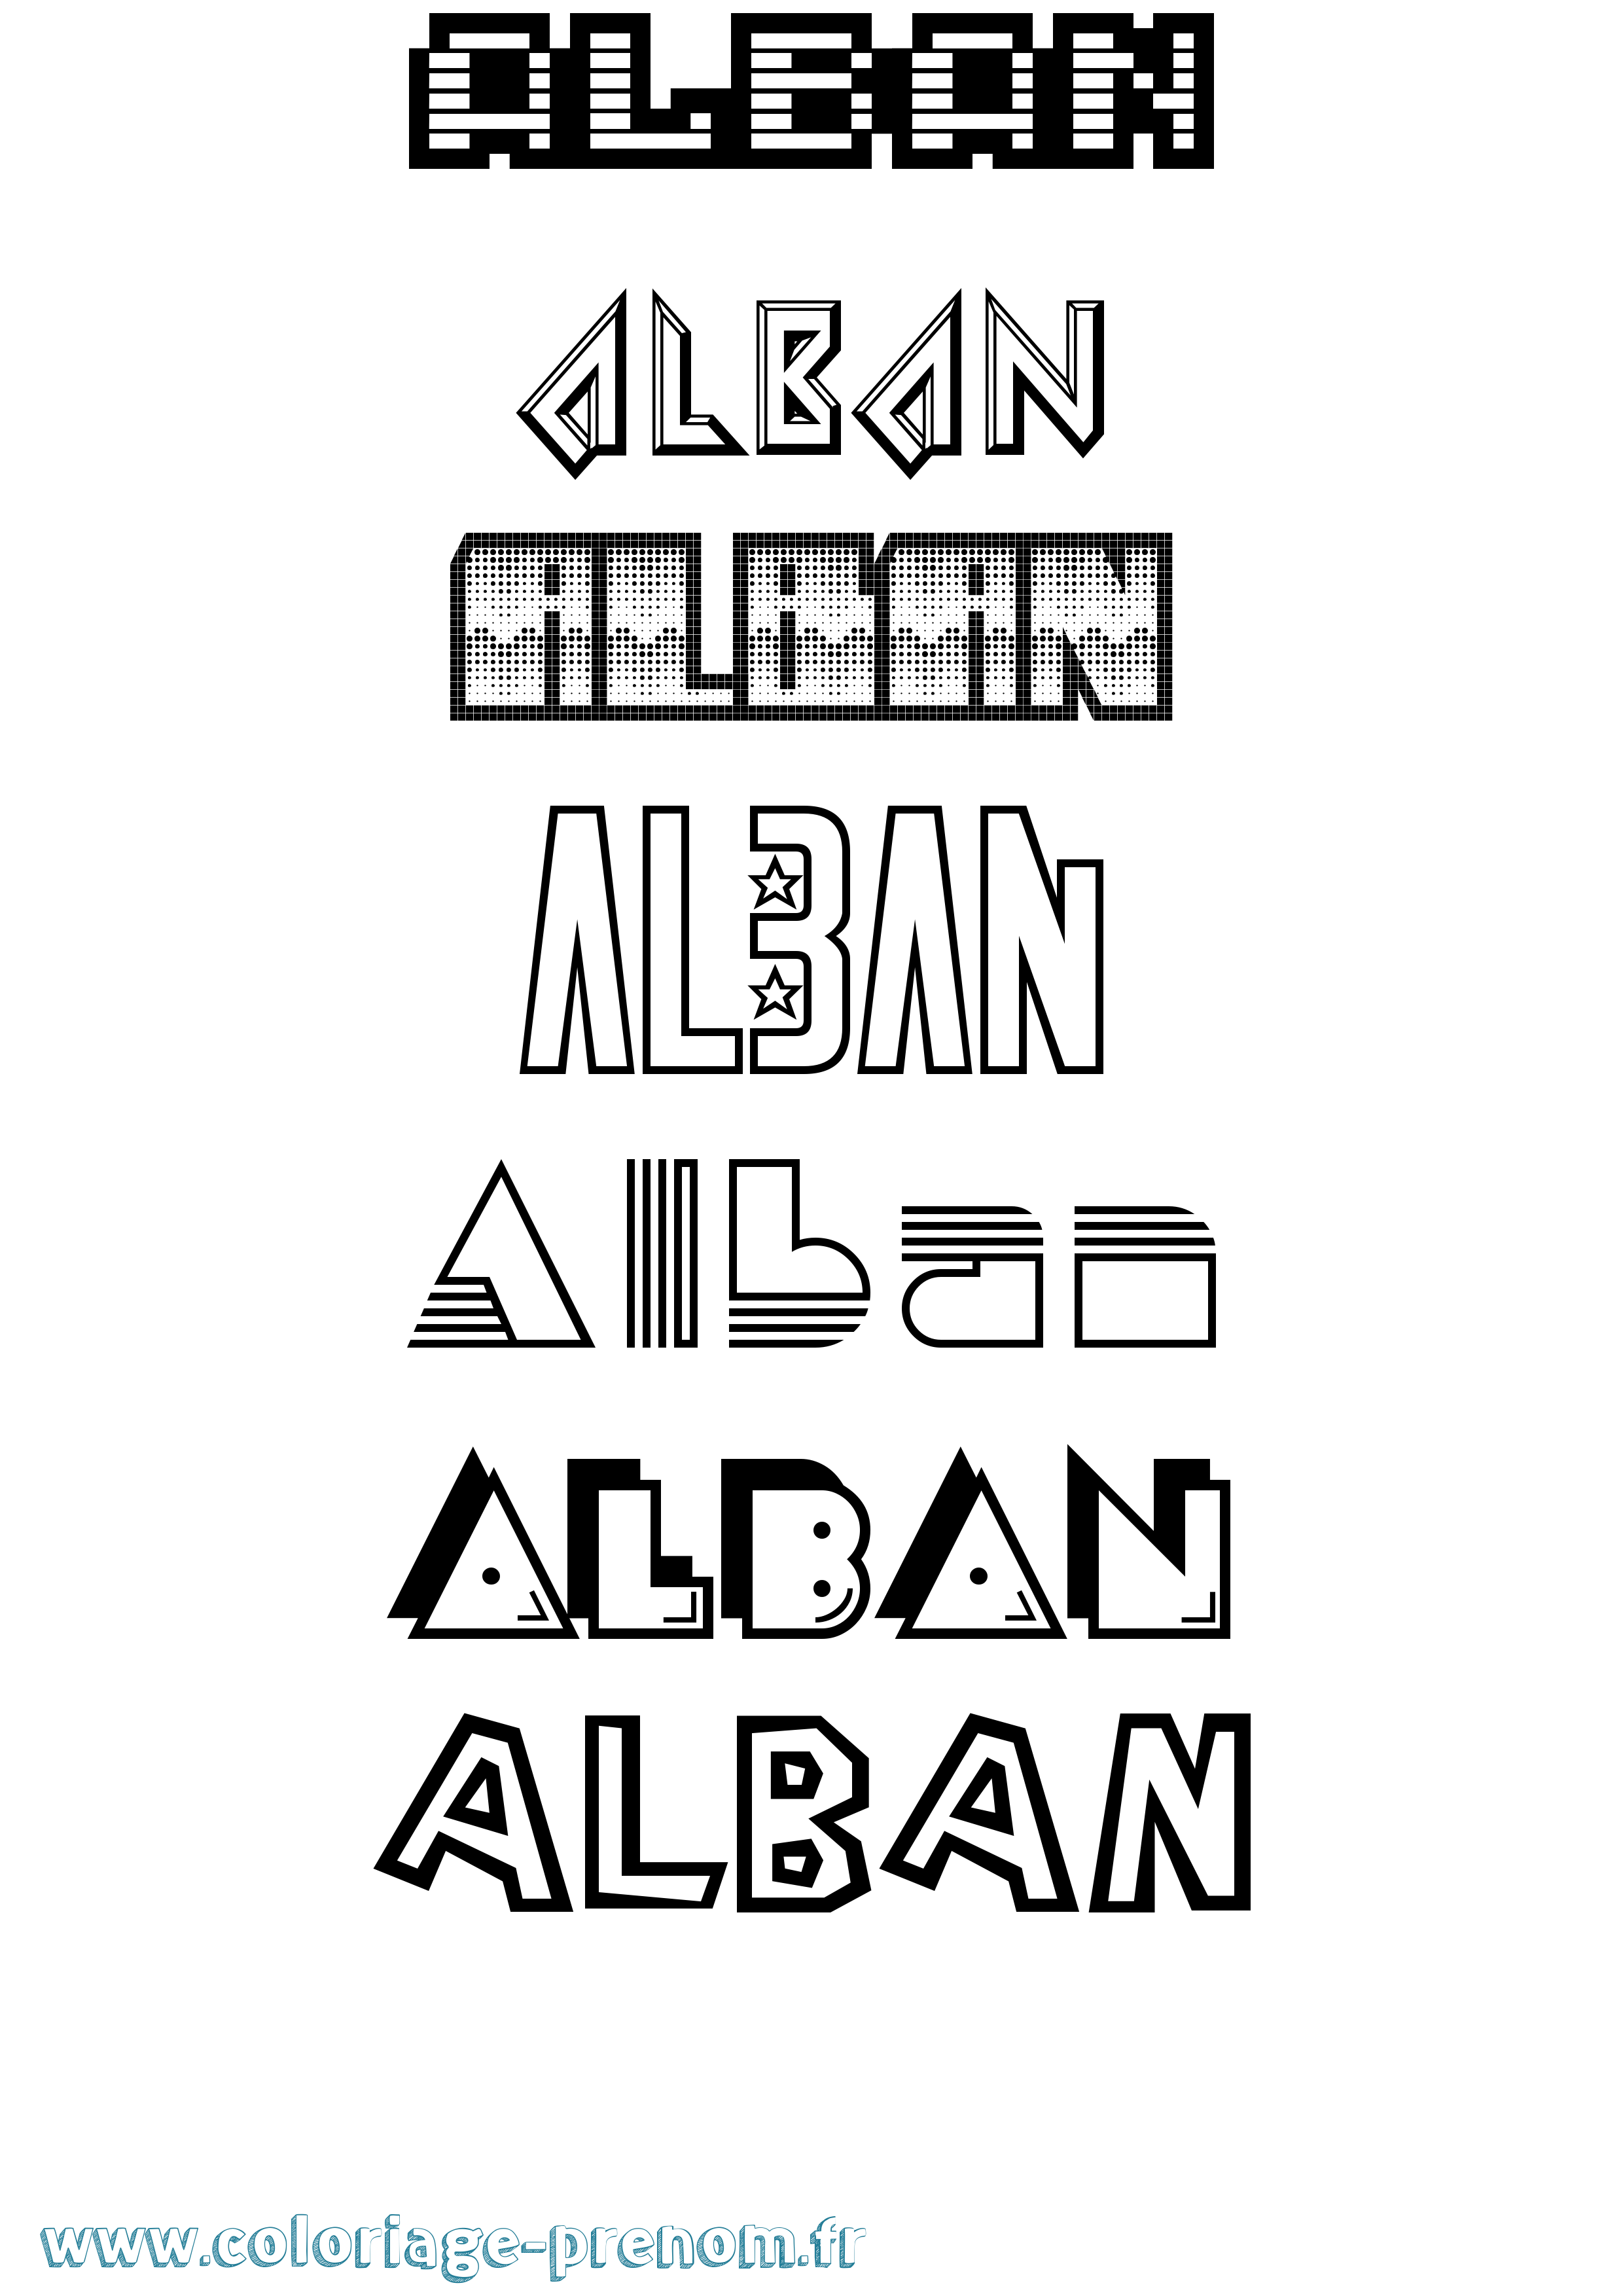 Coloriage prénom Alban